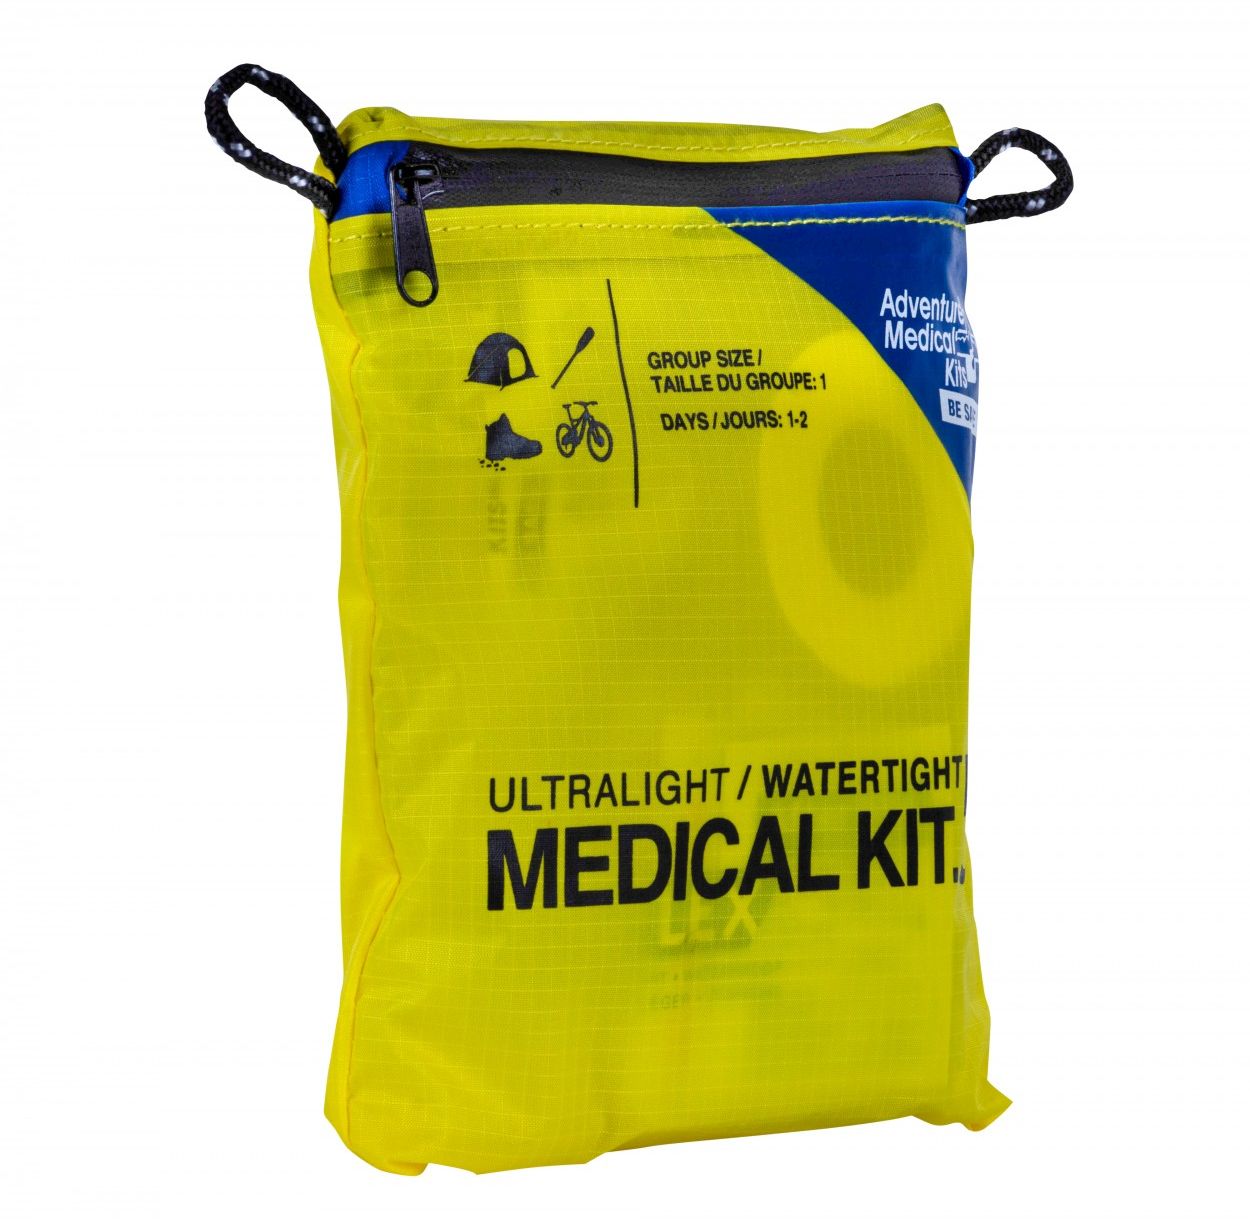 Ultralight and Watertight .5 Medical Kit